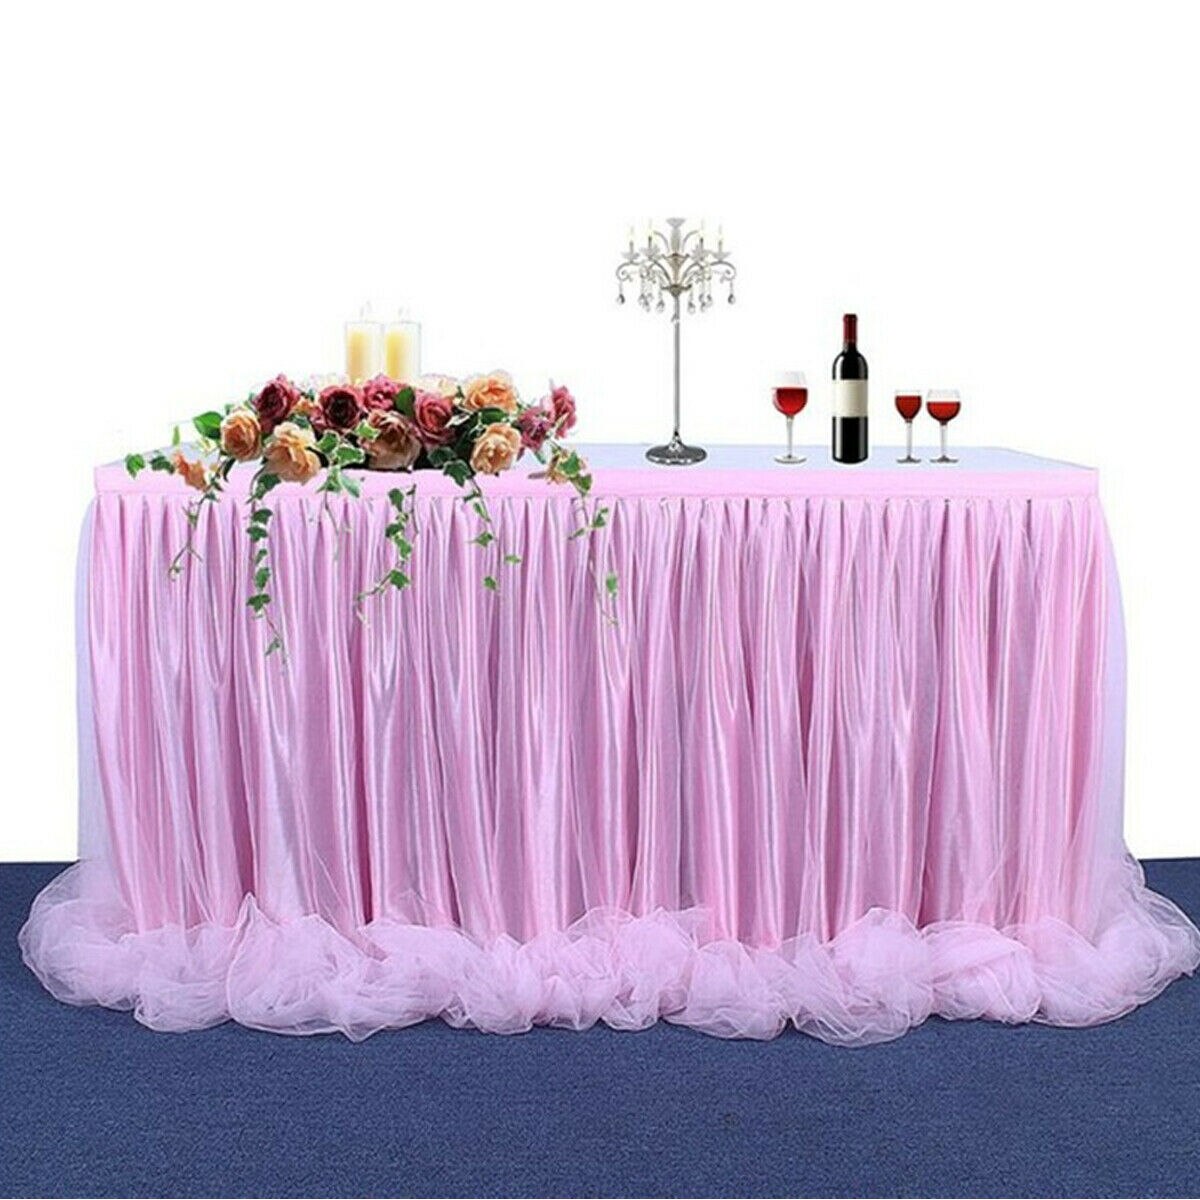 Tulle tutu bord nederdel tulle bordservice til bryllupsdekoration baby shower fest bryllup bord fodpaneler hjemme tekstil